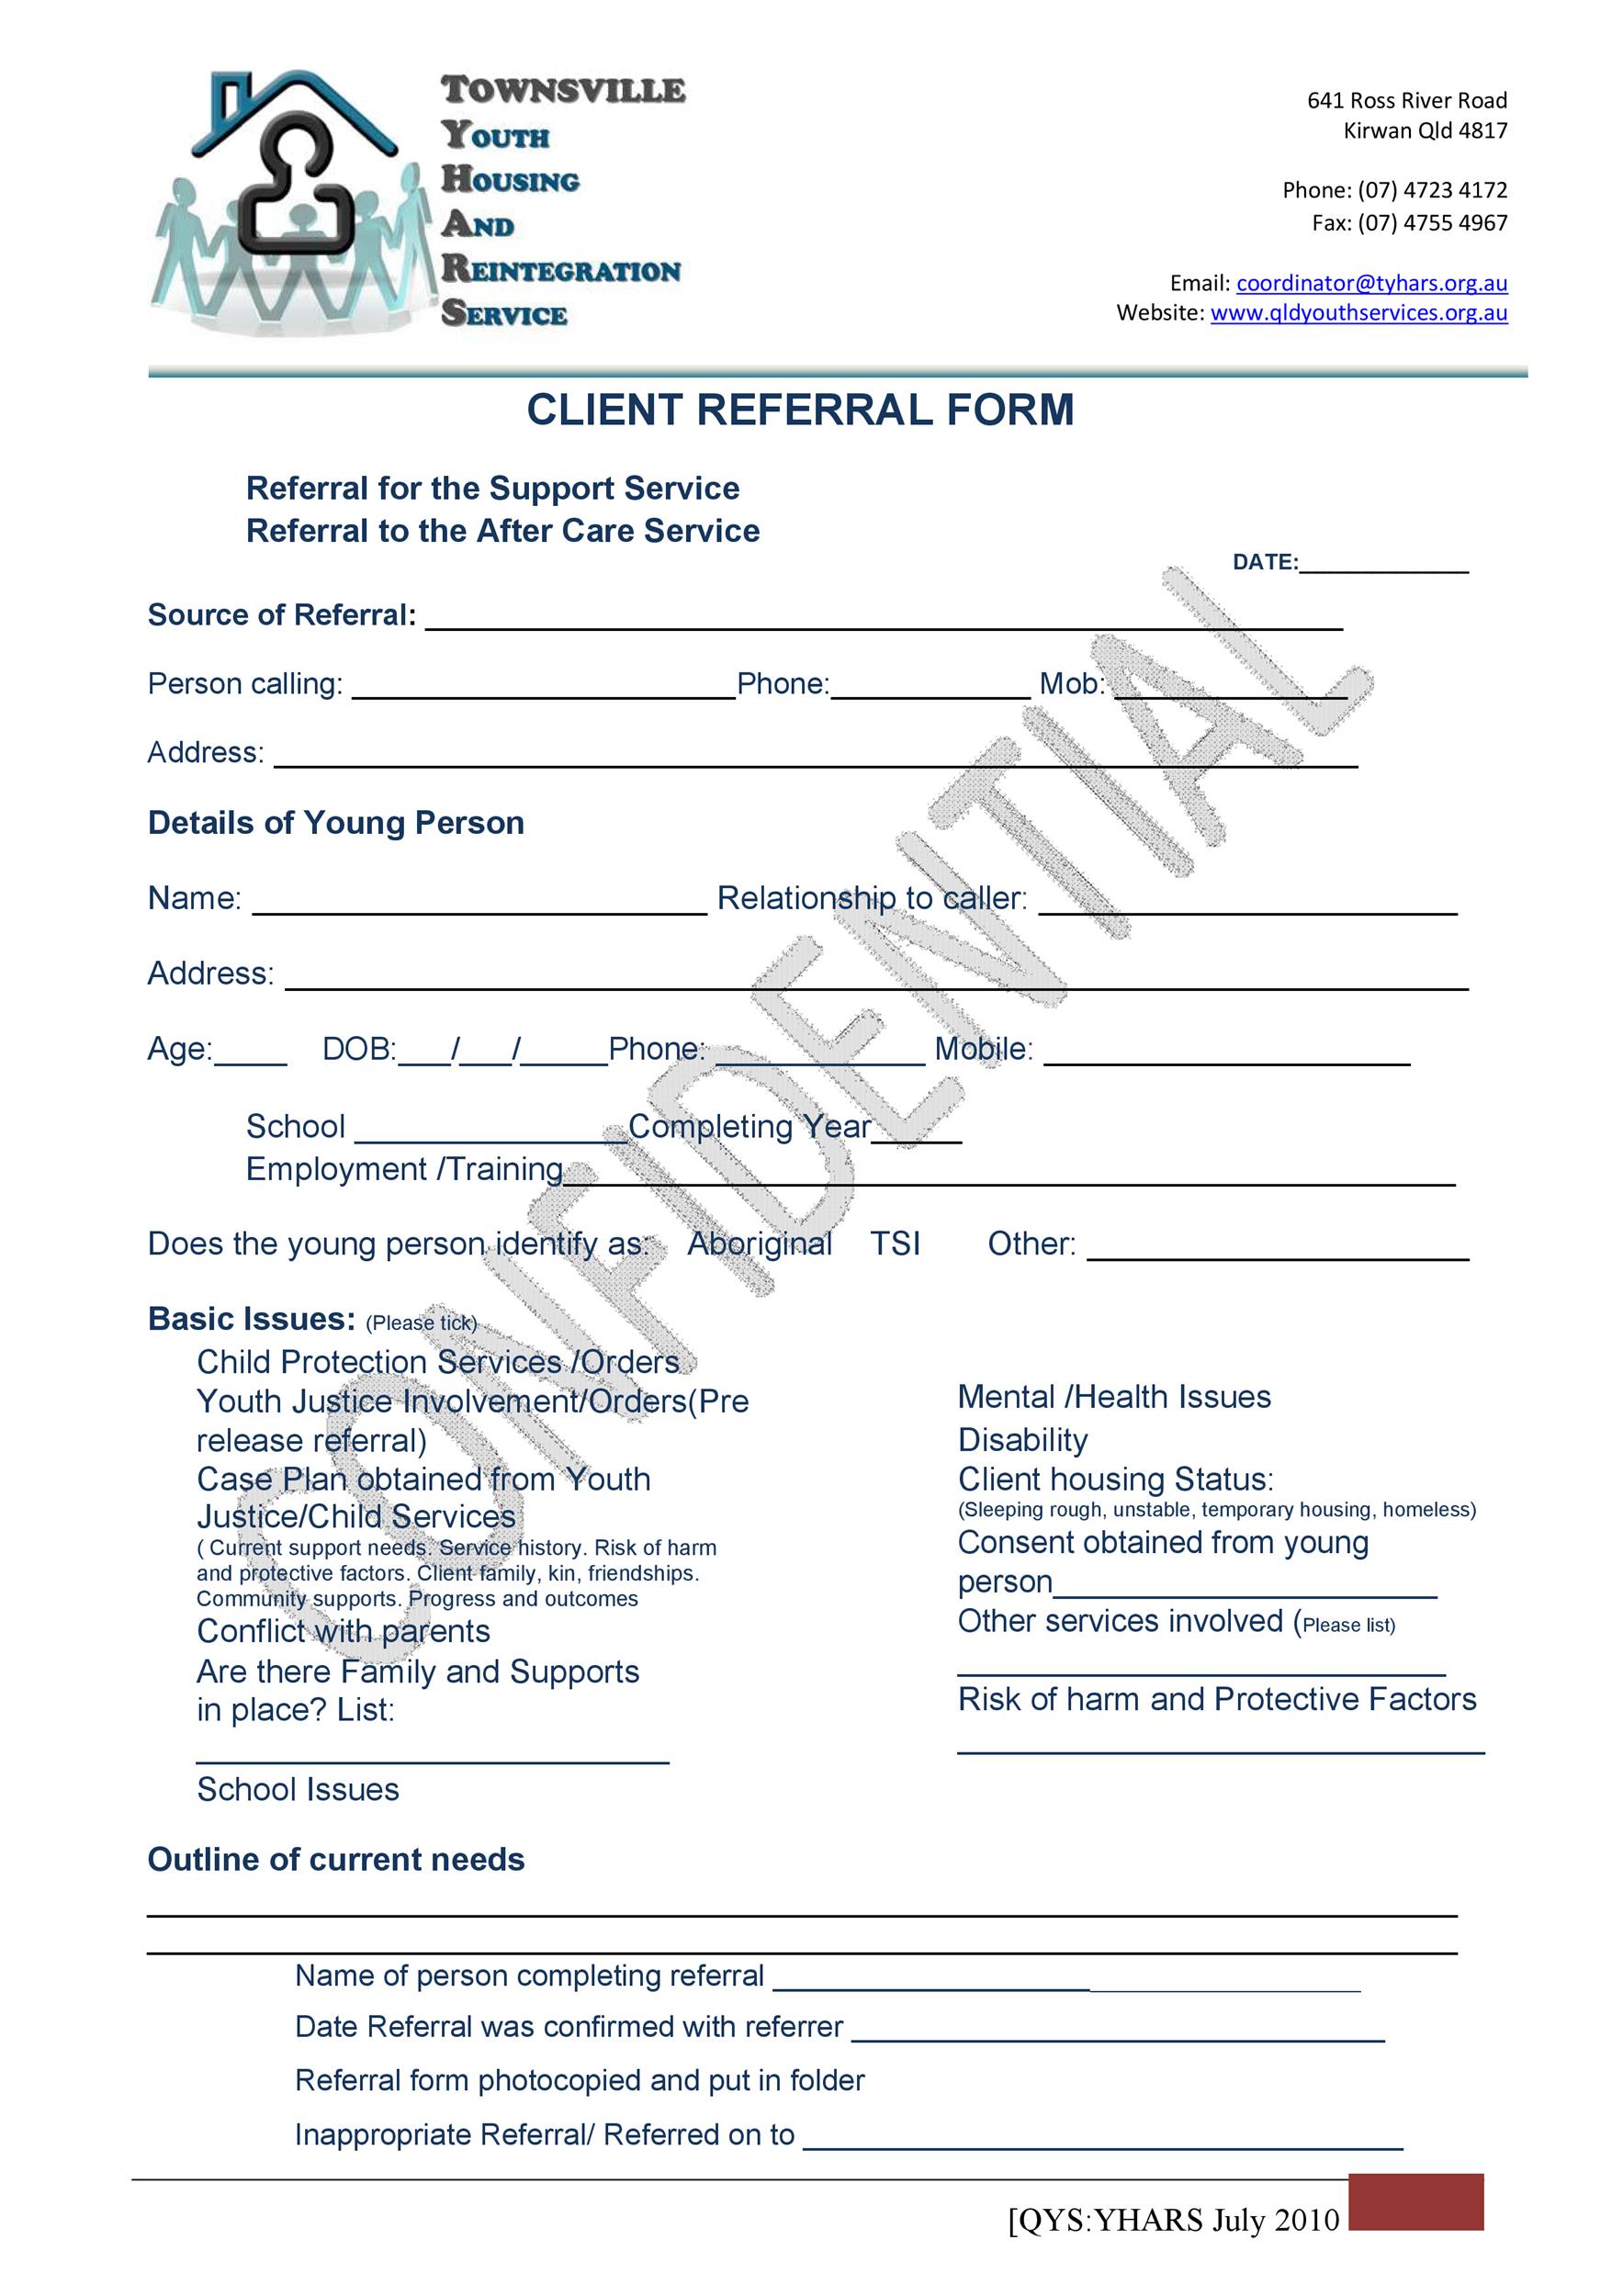 50 Referral Form Templates Medical General TemplateLab